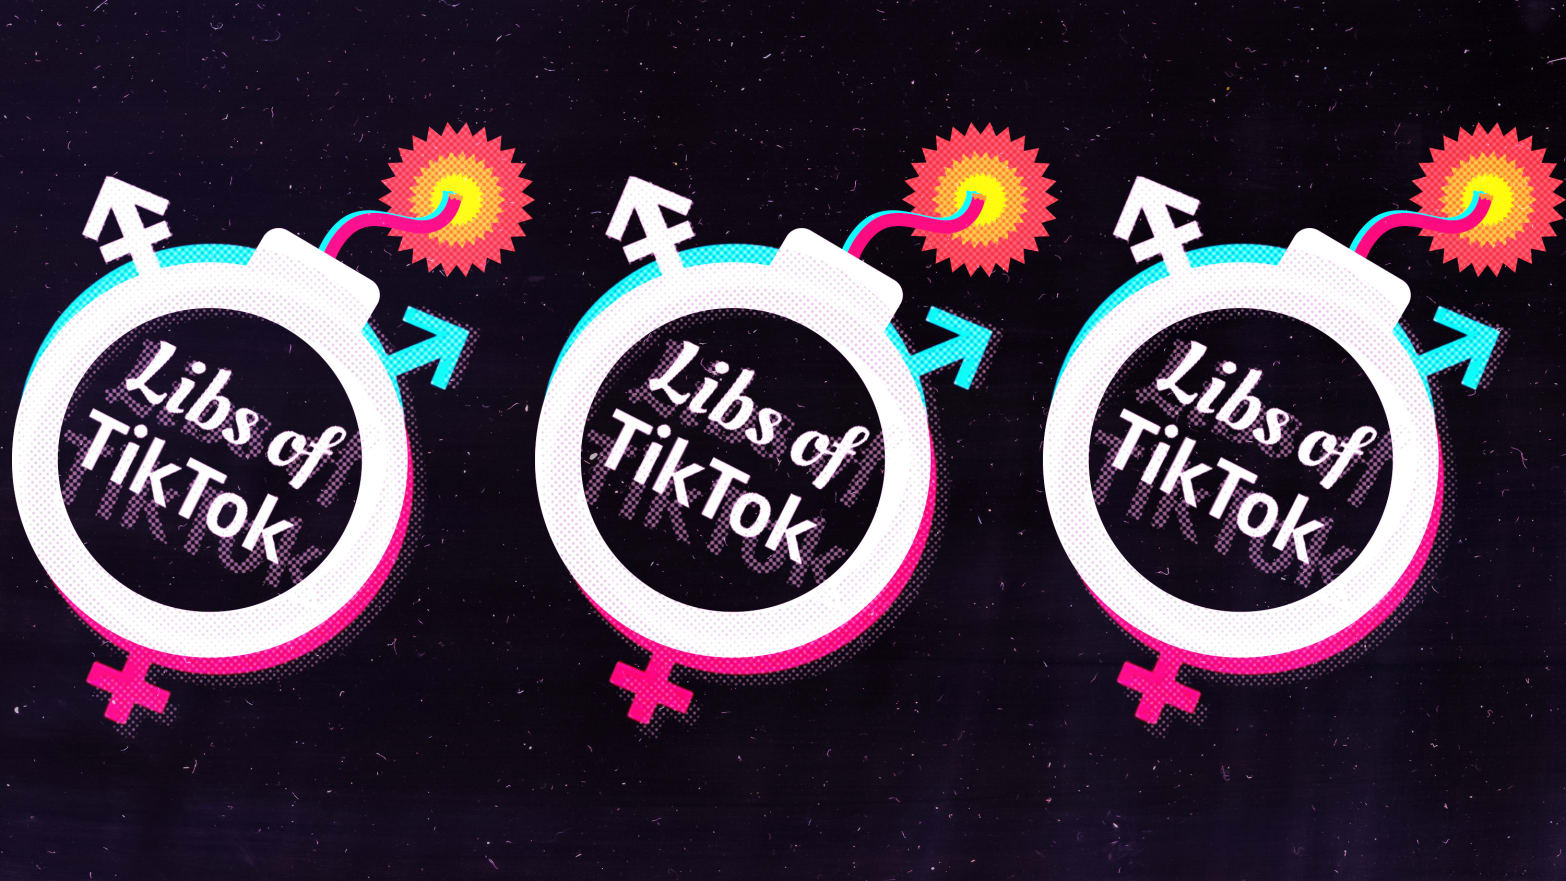 A photo illustration using the logo of Libs of Tiktok.